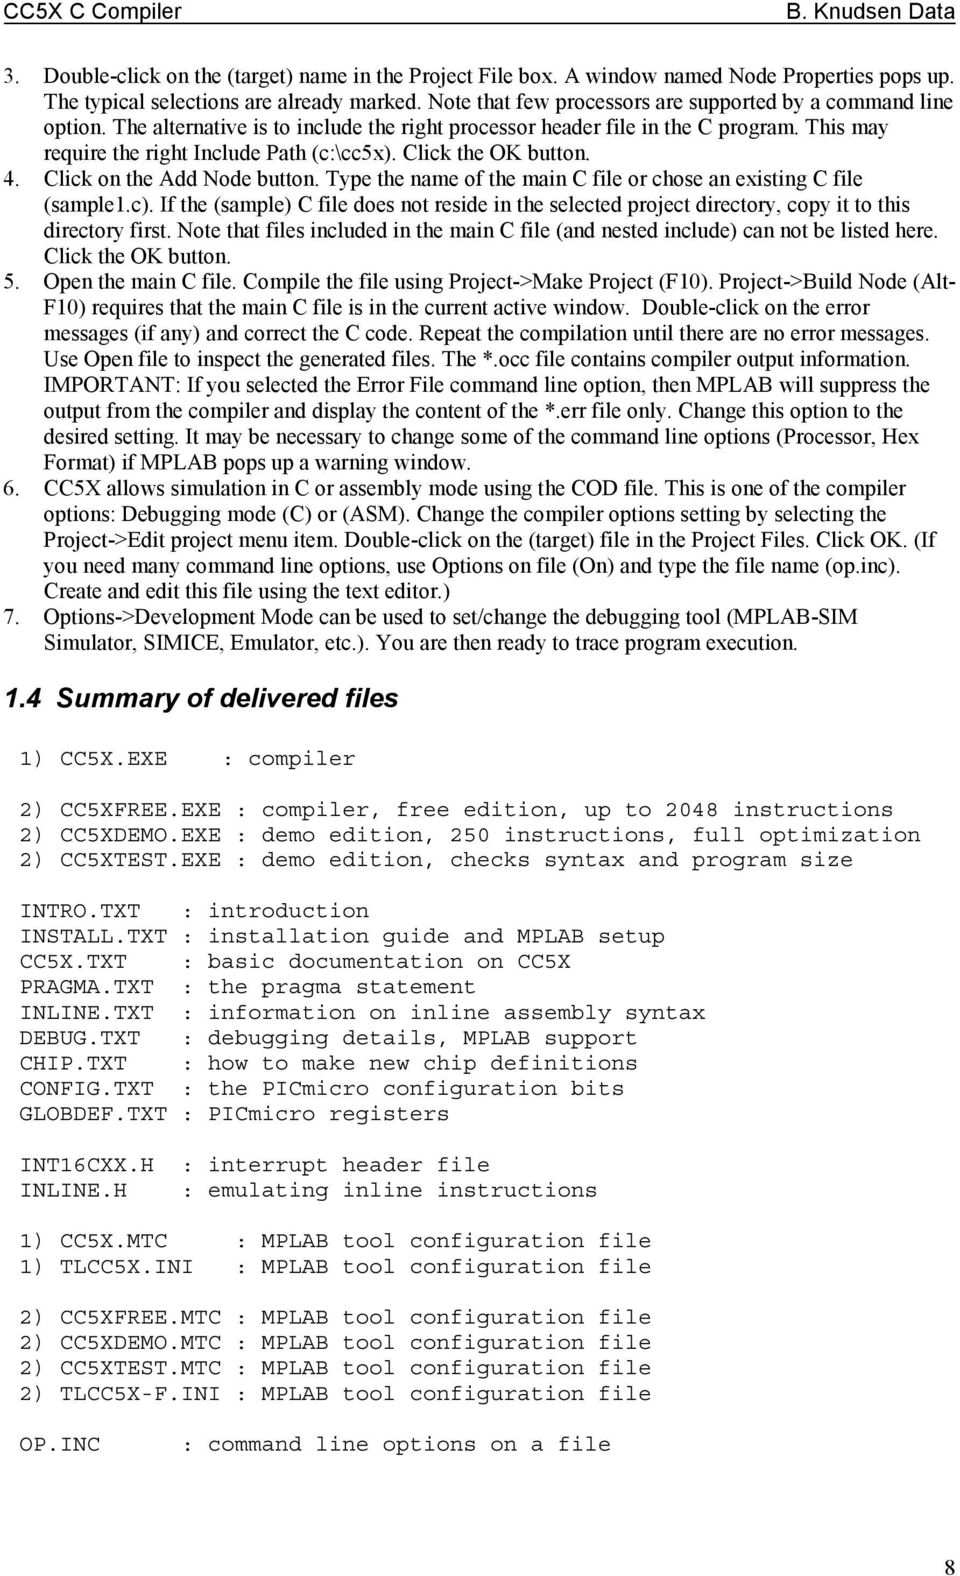 cc5x c compiler